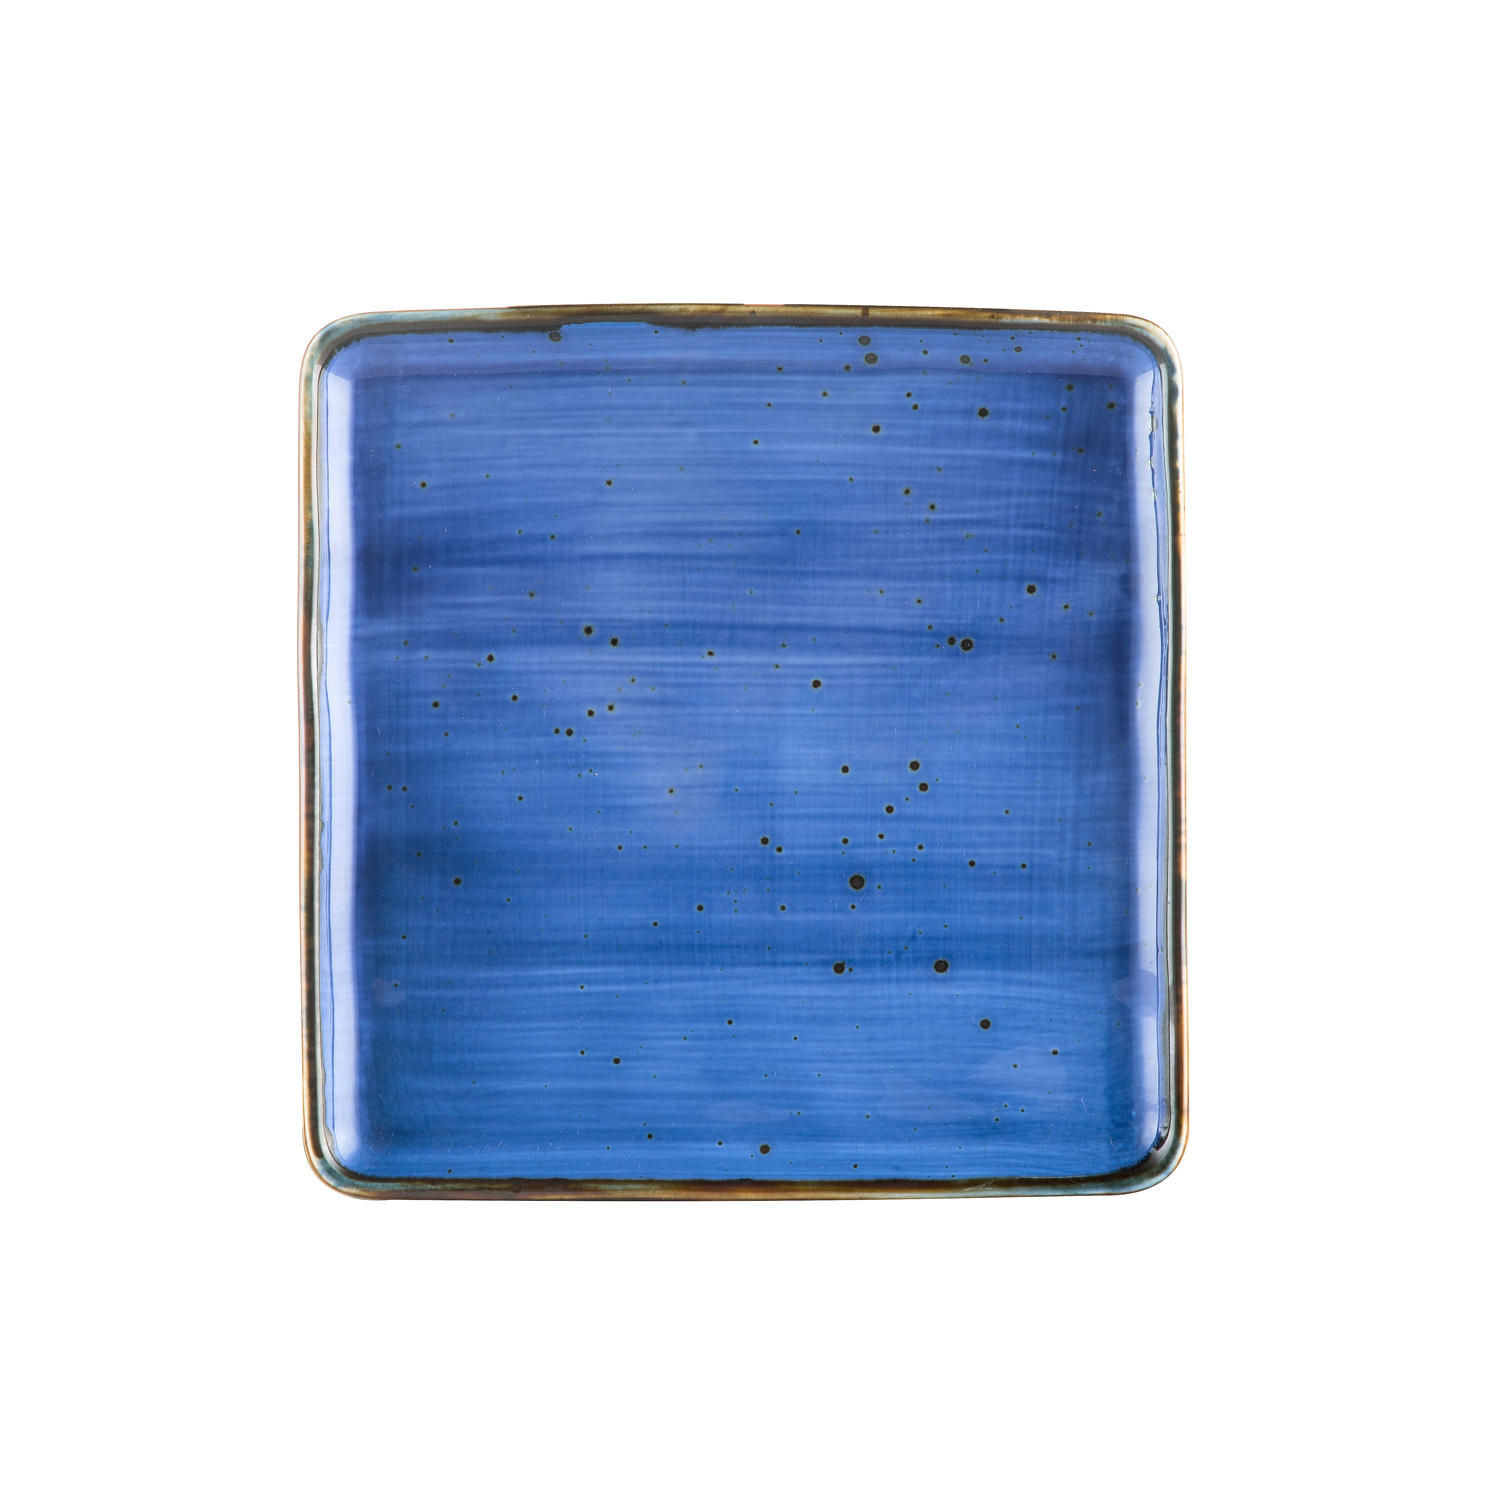 CAC China TUS-SQ8-BLU Tucson Porcelain Starry Night Blue Square Plate 8 1/4"  - 2 dozen